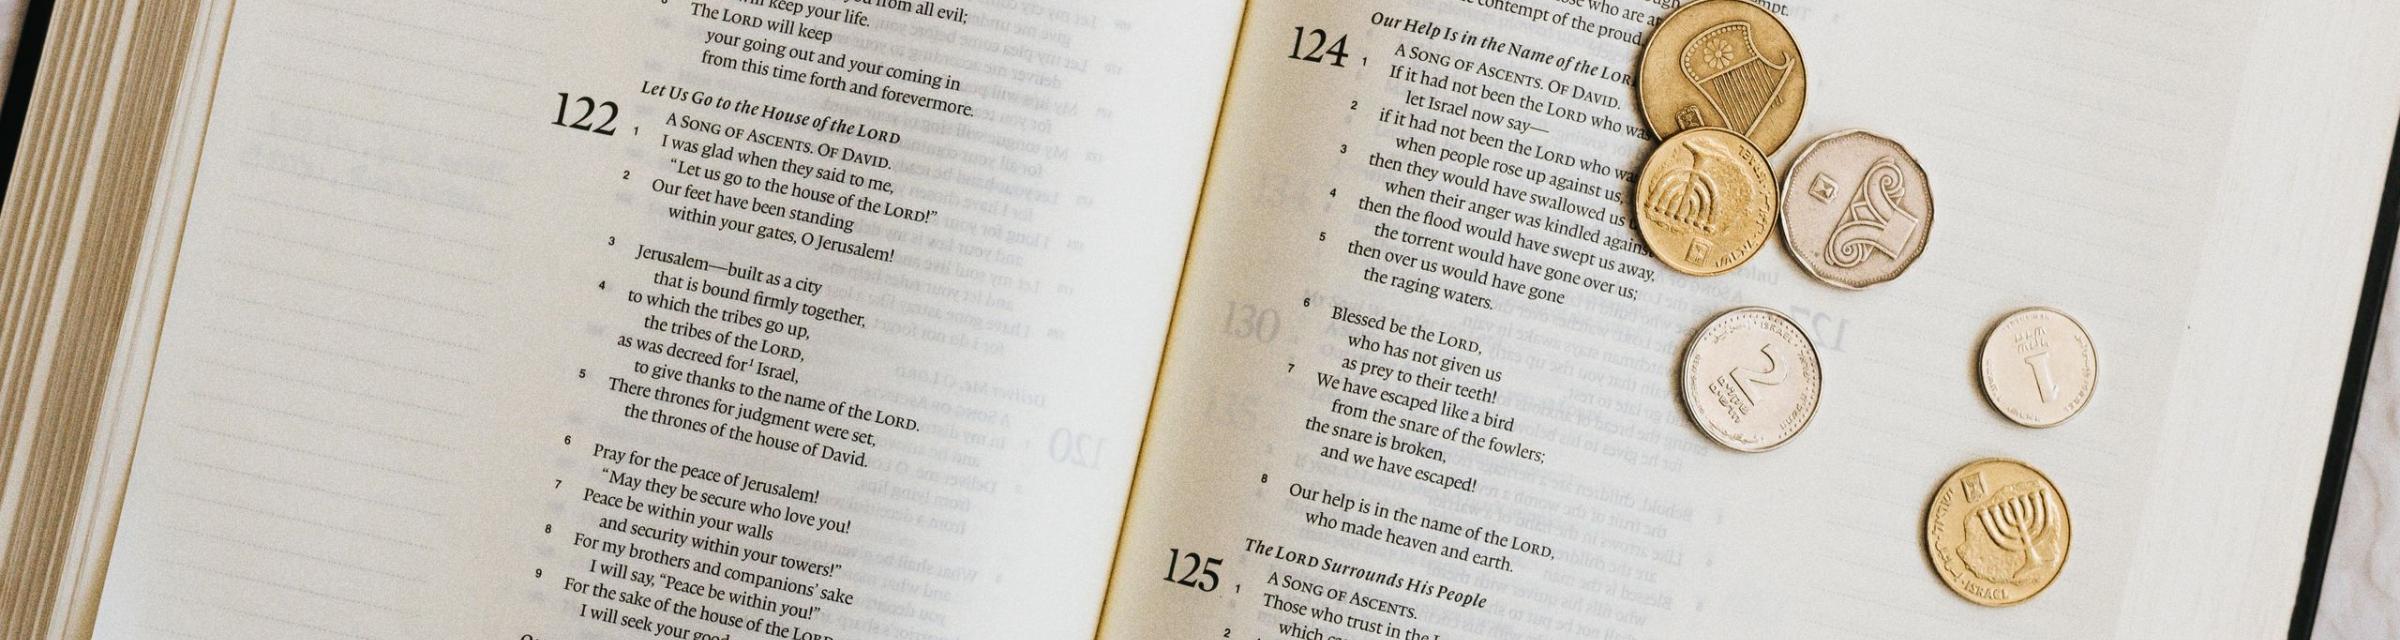 Shekels on a Bible by Sara Beth Pritchard.